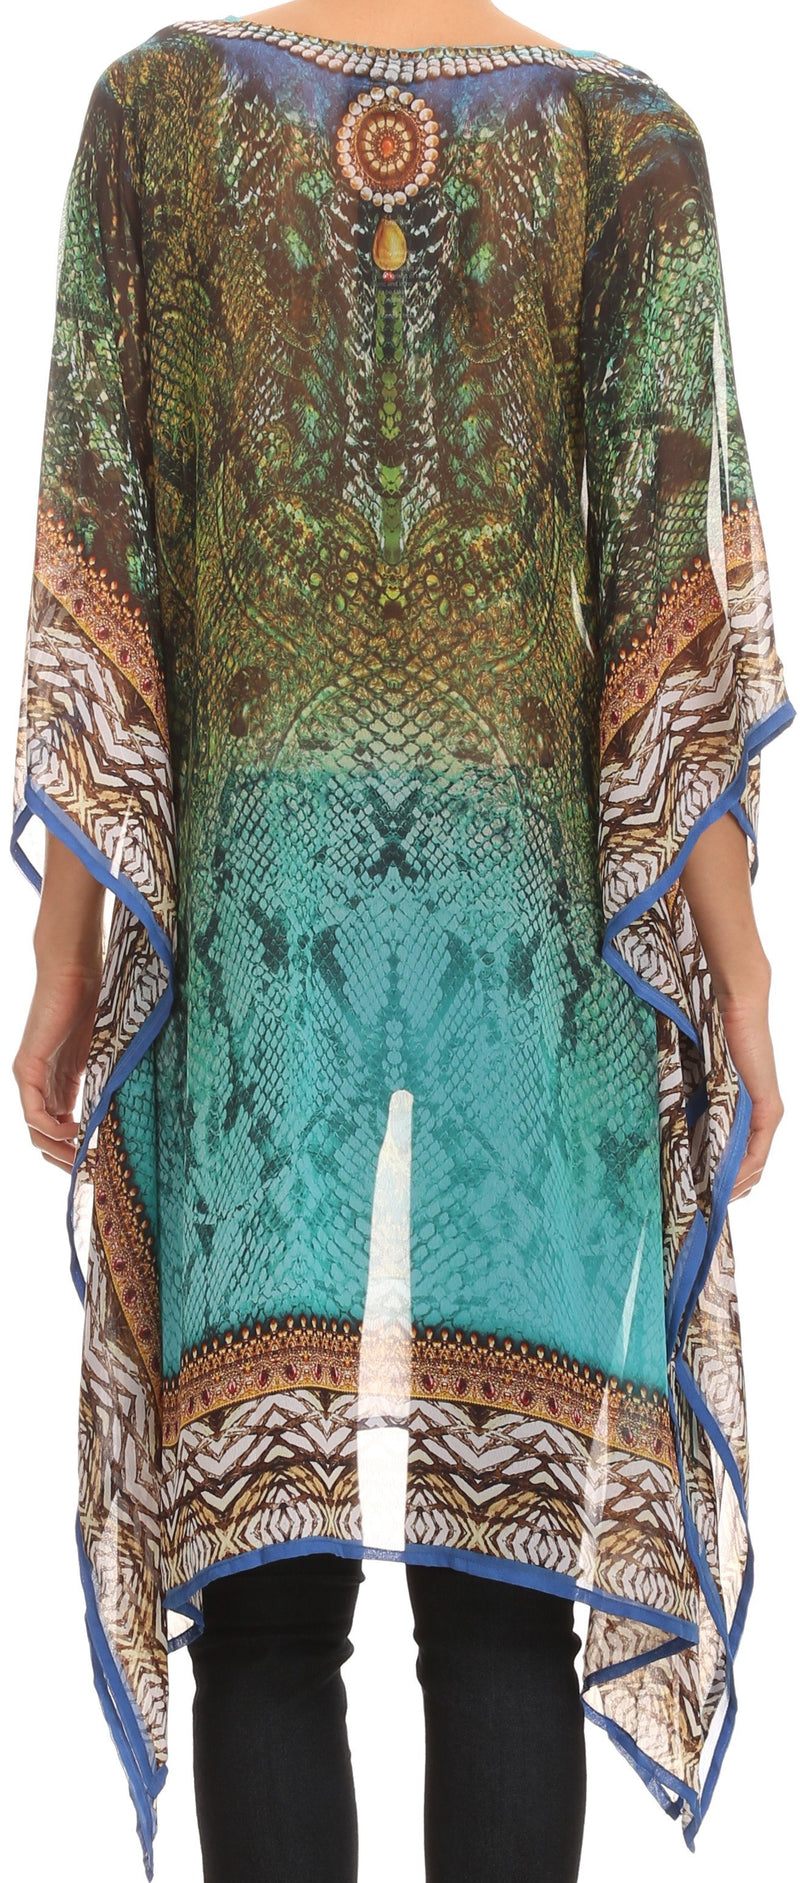 Sakkas Tala Rhinestone Accented Multicolored Sheer Beach Dress / Cover Up